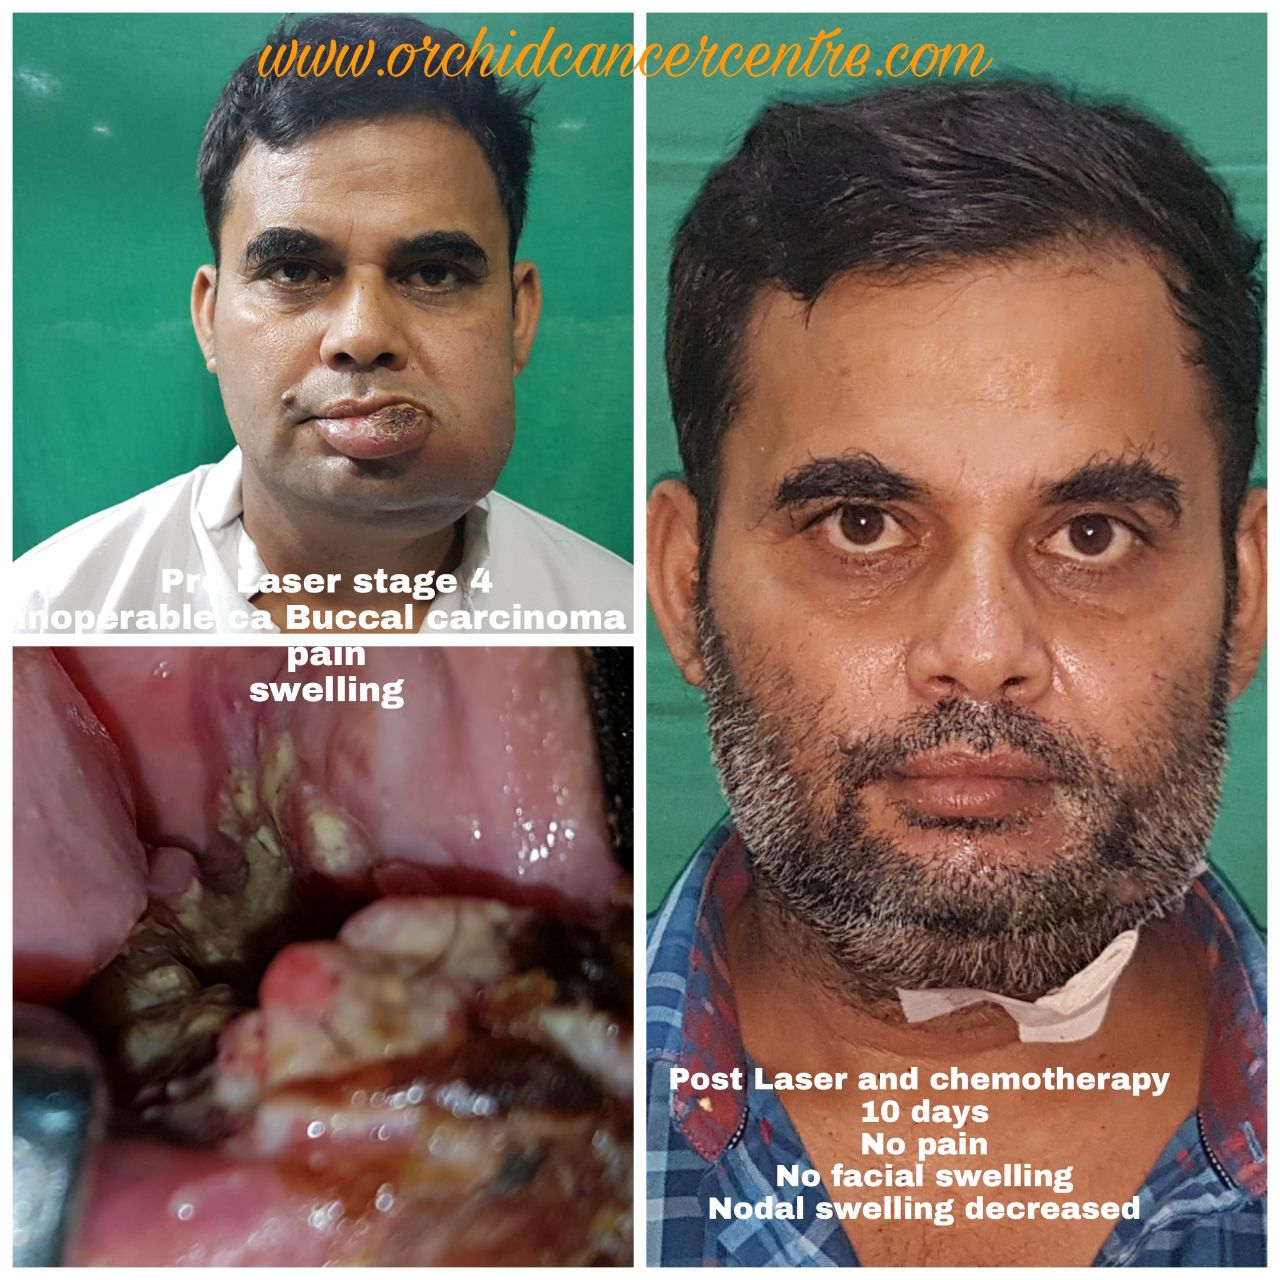 mouth cancer treatment in ayurveda, ayurvedic treatment for oral cancer, tongue cancer treatment in ayurveda